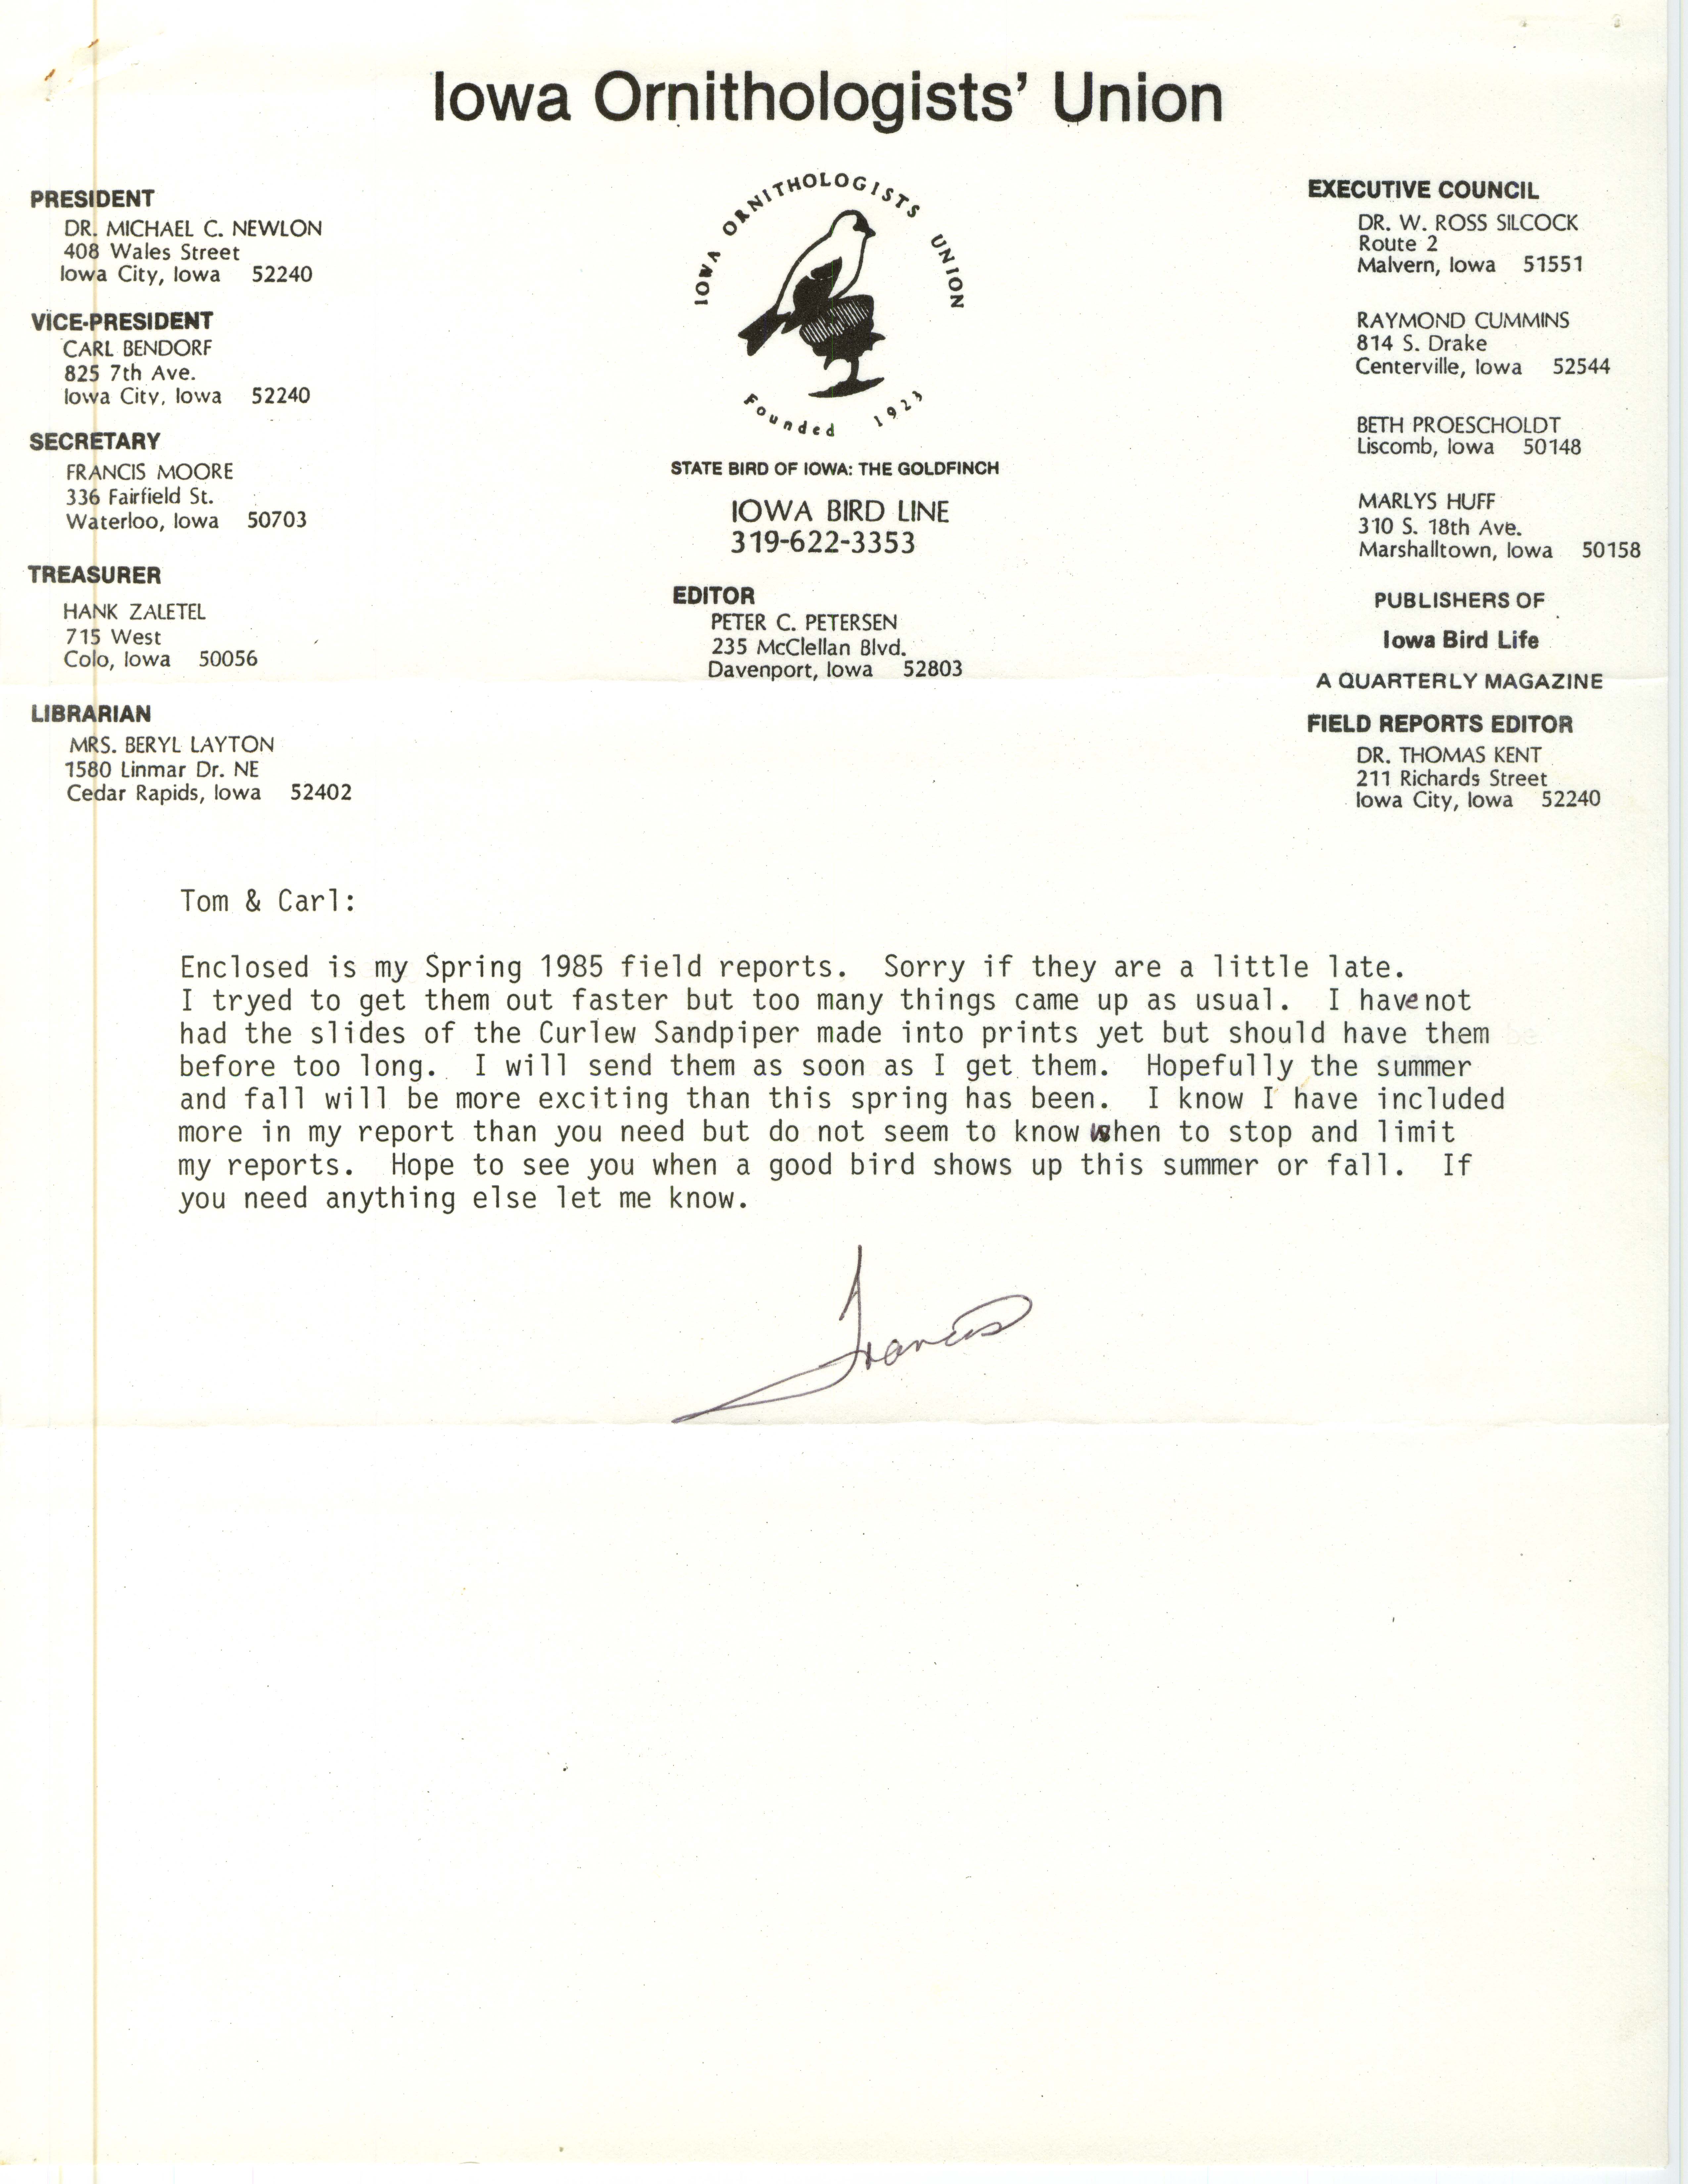 Francis L. Moore letter to Thomas H. Kent and Carl J. Bendorf regarding bird sightings, spring 1985